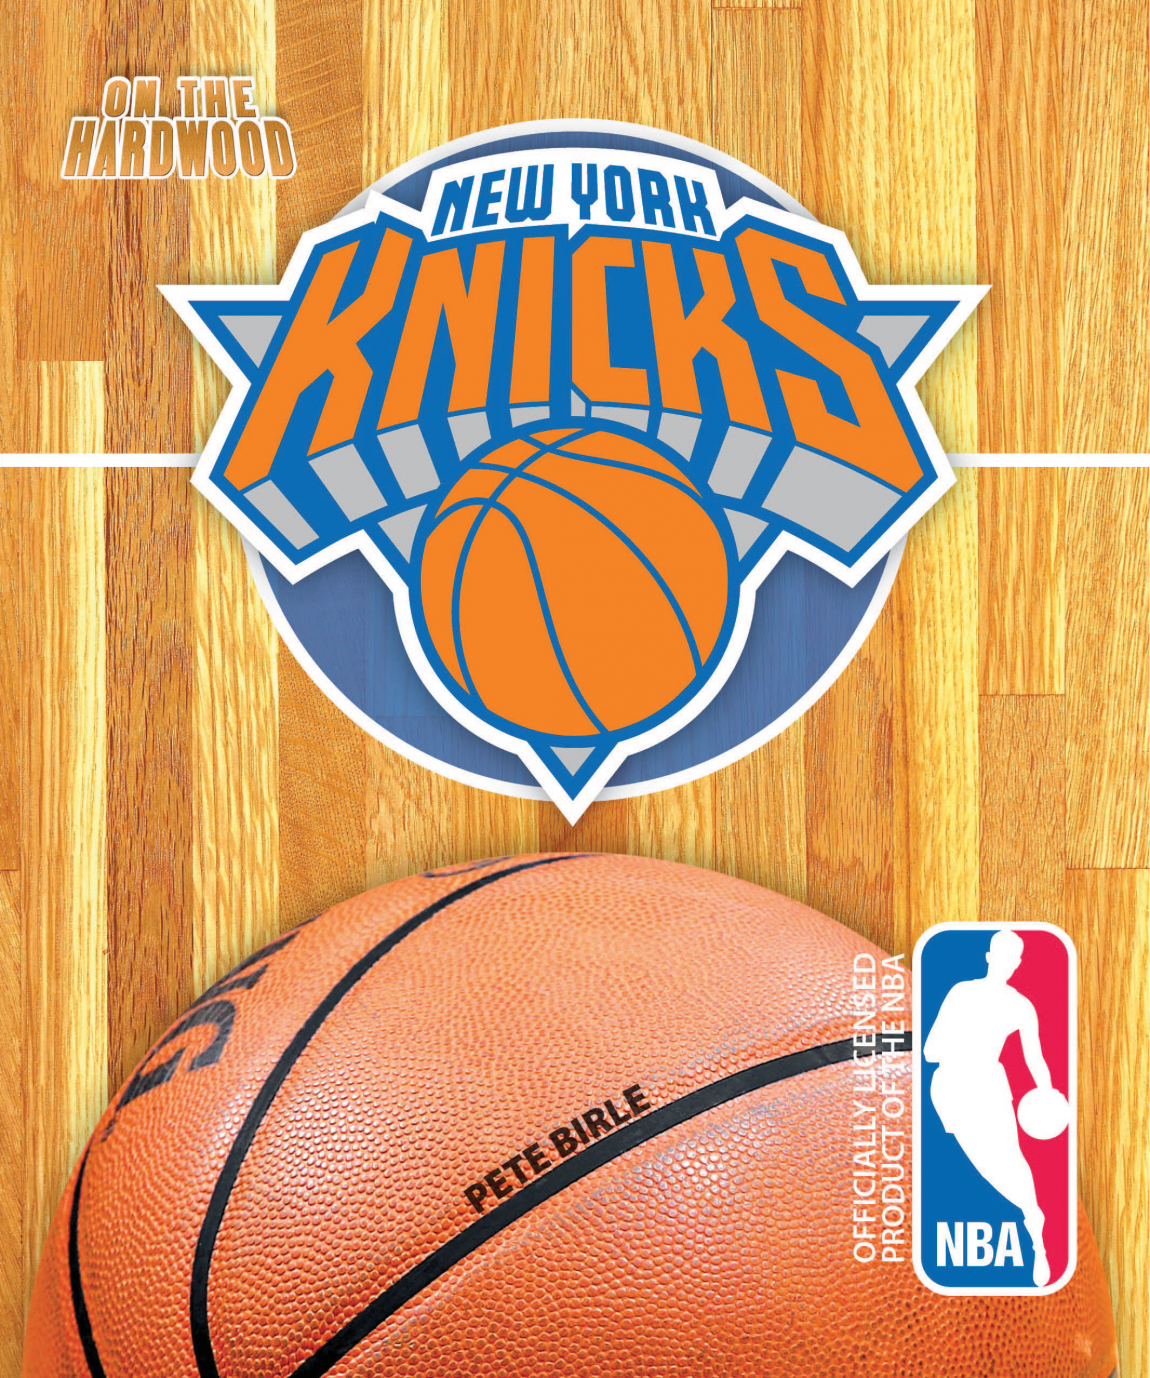 Knicks-1.png